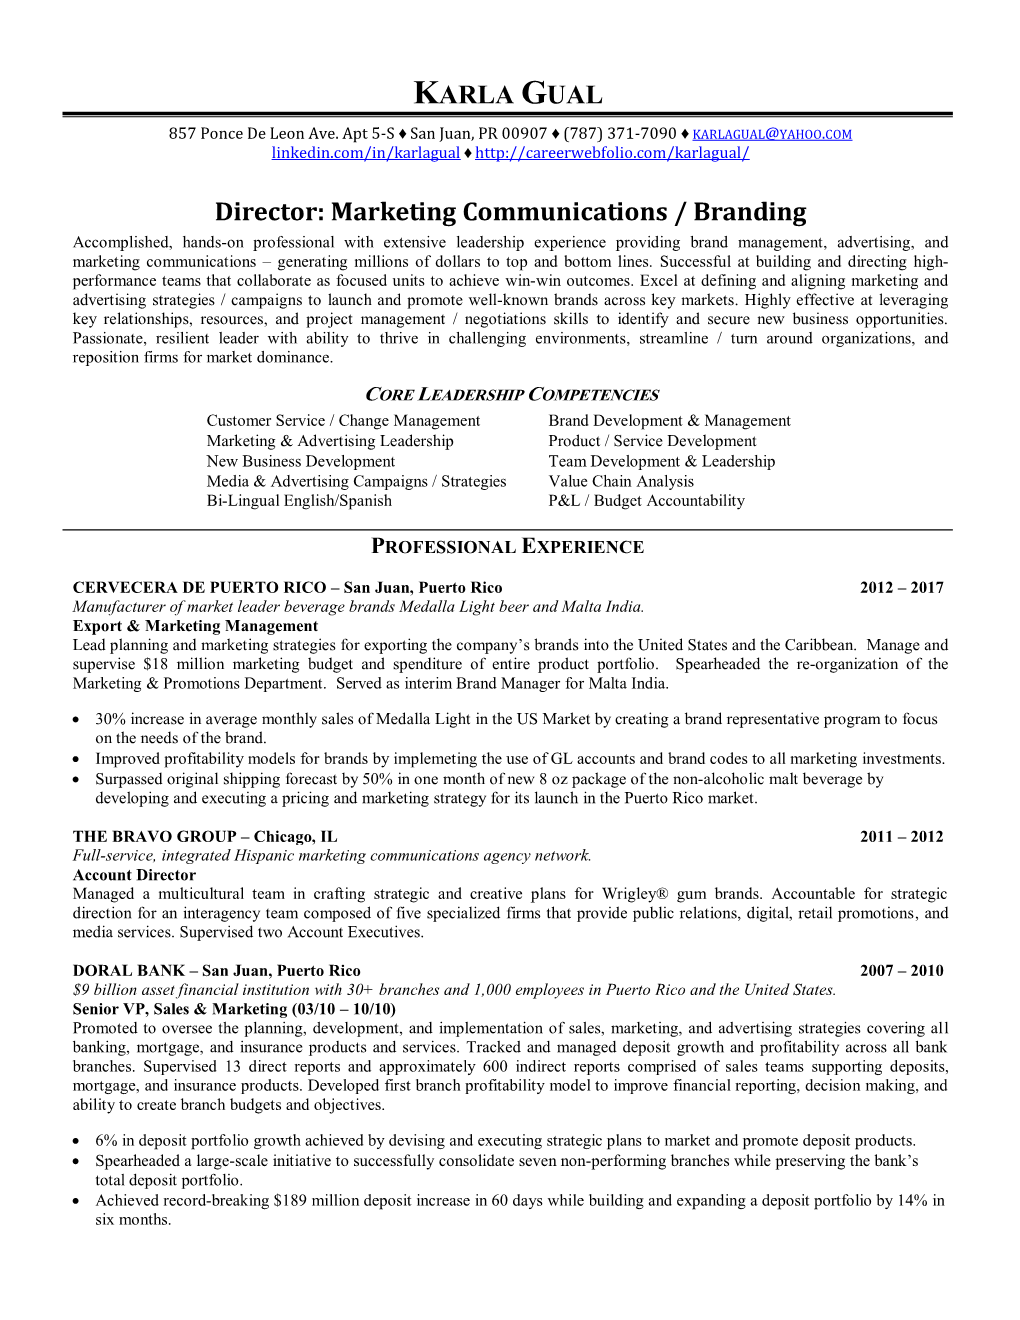 KARLA GUAL Director: Marketing Communications / Branding